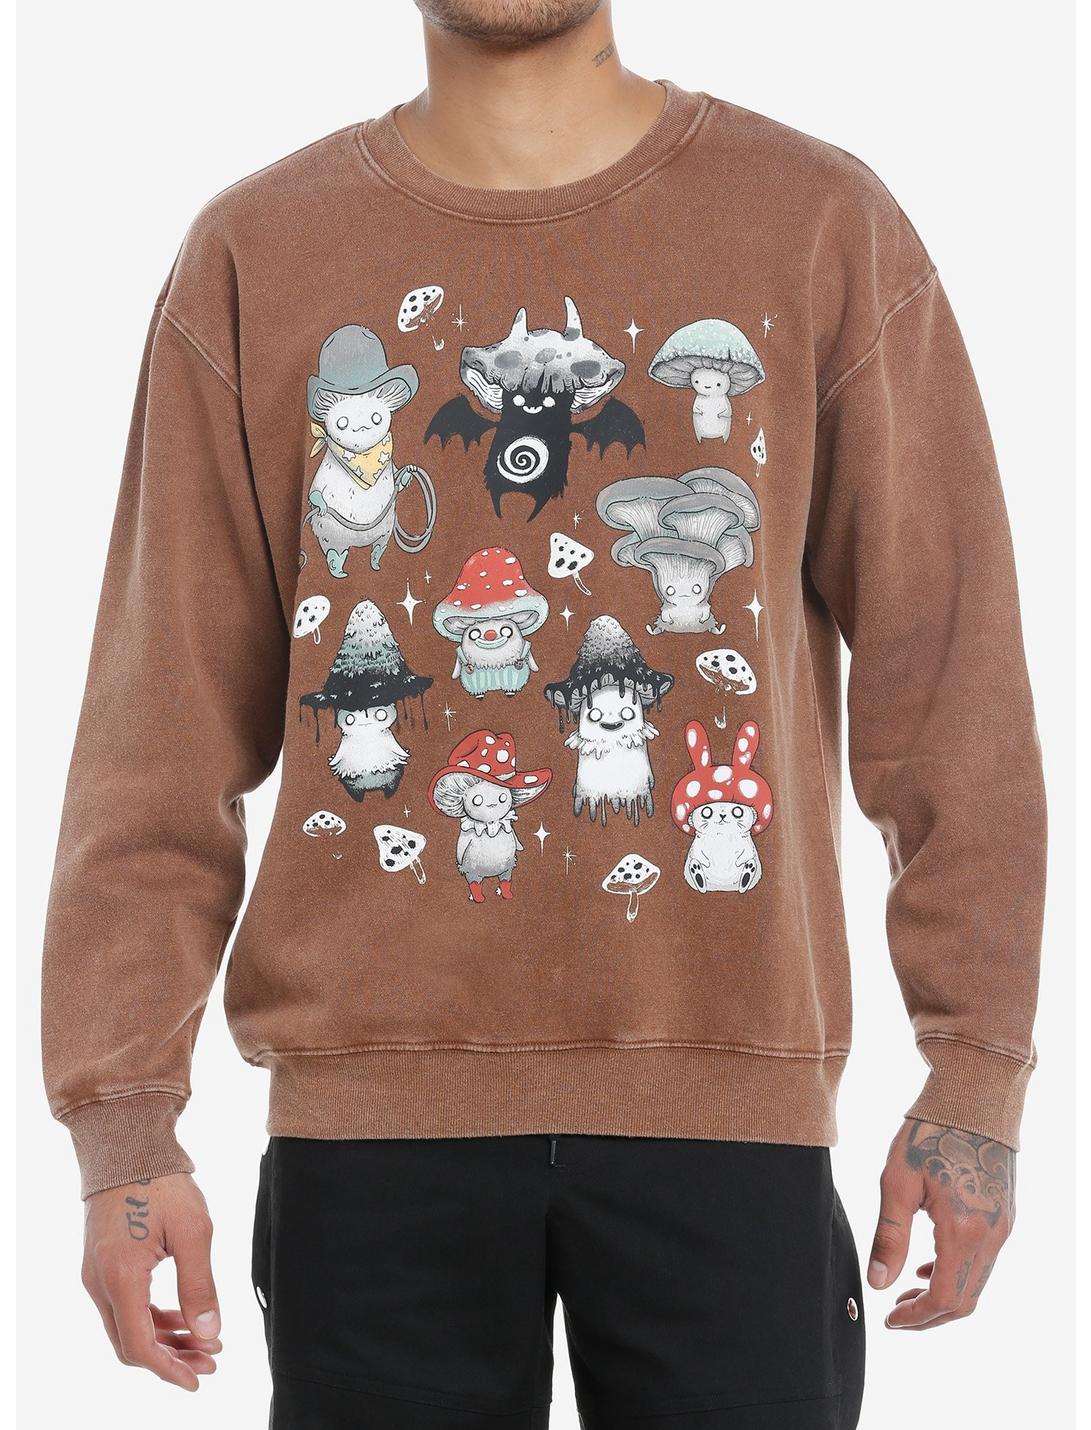 Mushroom Creatures Sweatshirt By Guild Of Calamity, MULTI, hi-res